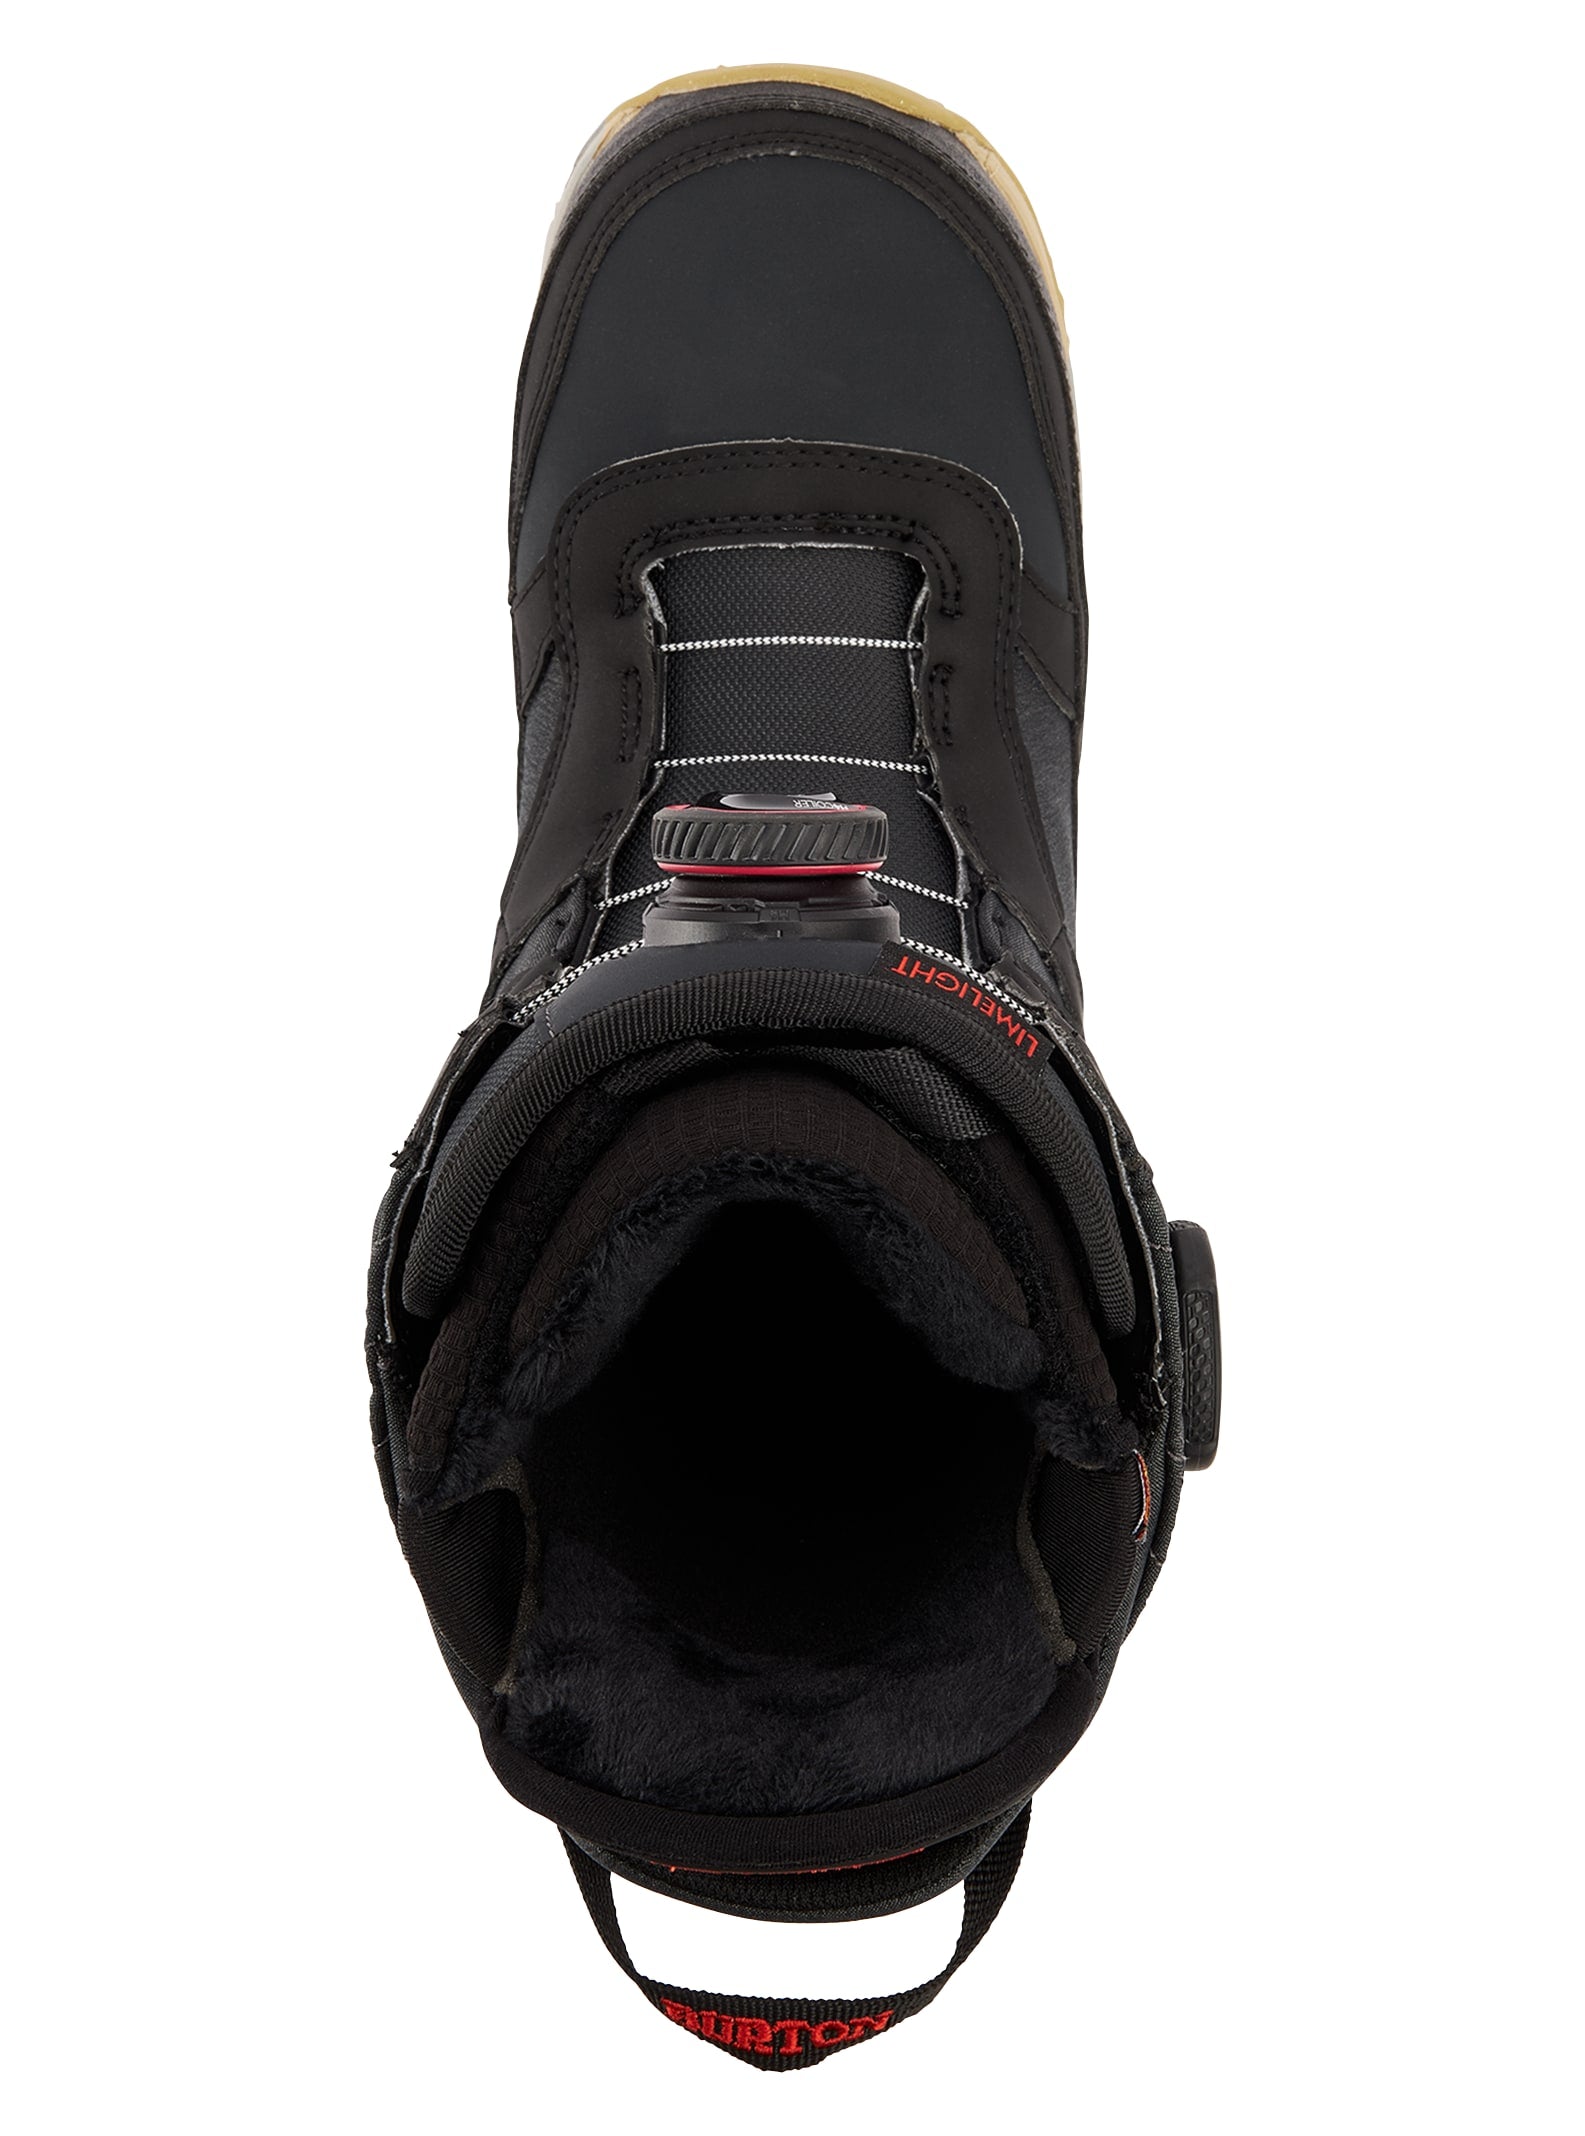 Women's Limelight BOA® Snowboard Boots, Black